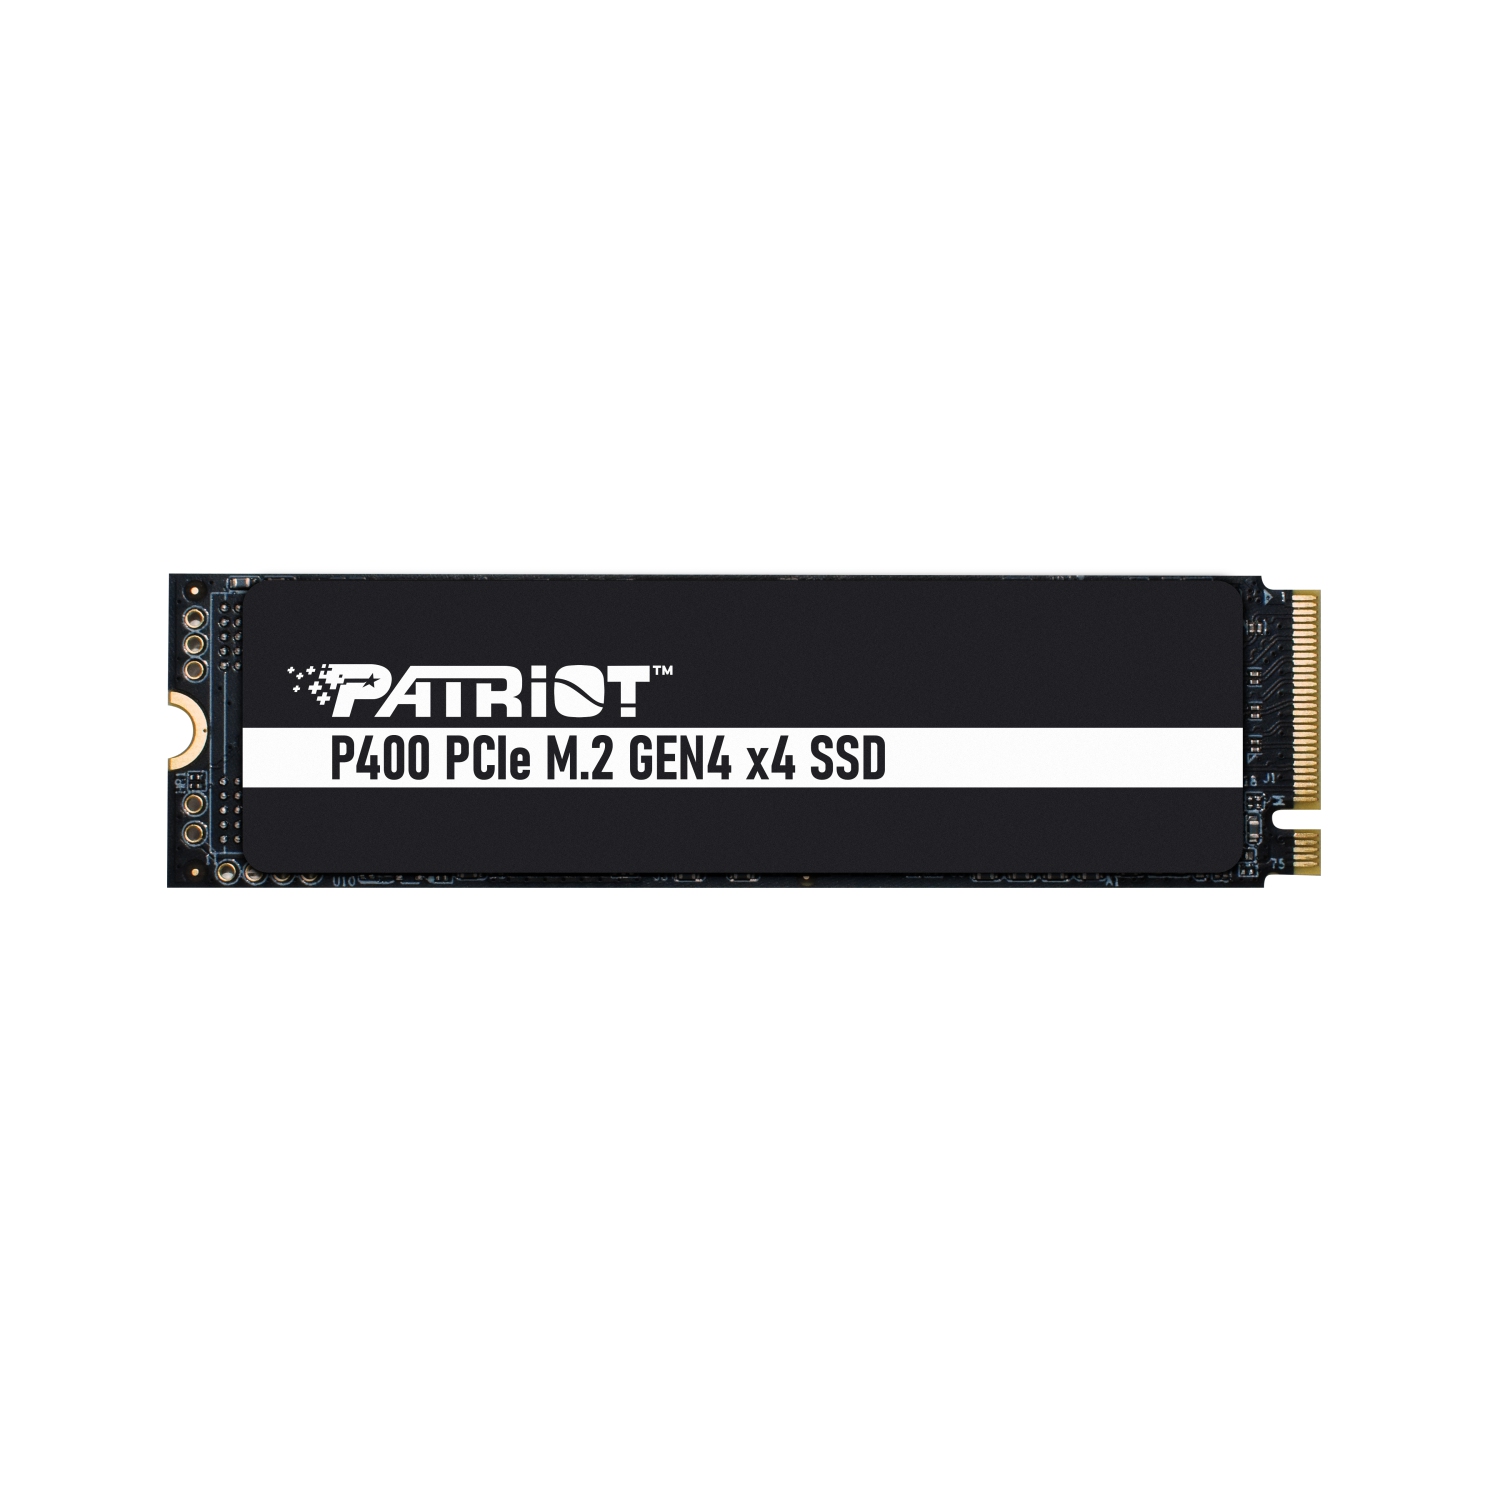 Patriot P400 1TB M.2 2280 PCIe Gen4 x 4 SSD - P400P1TBM28H